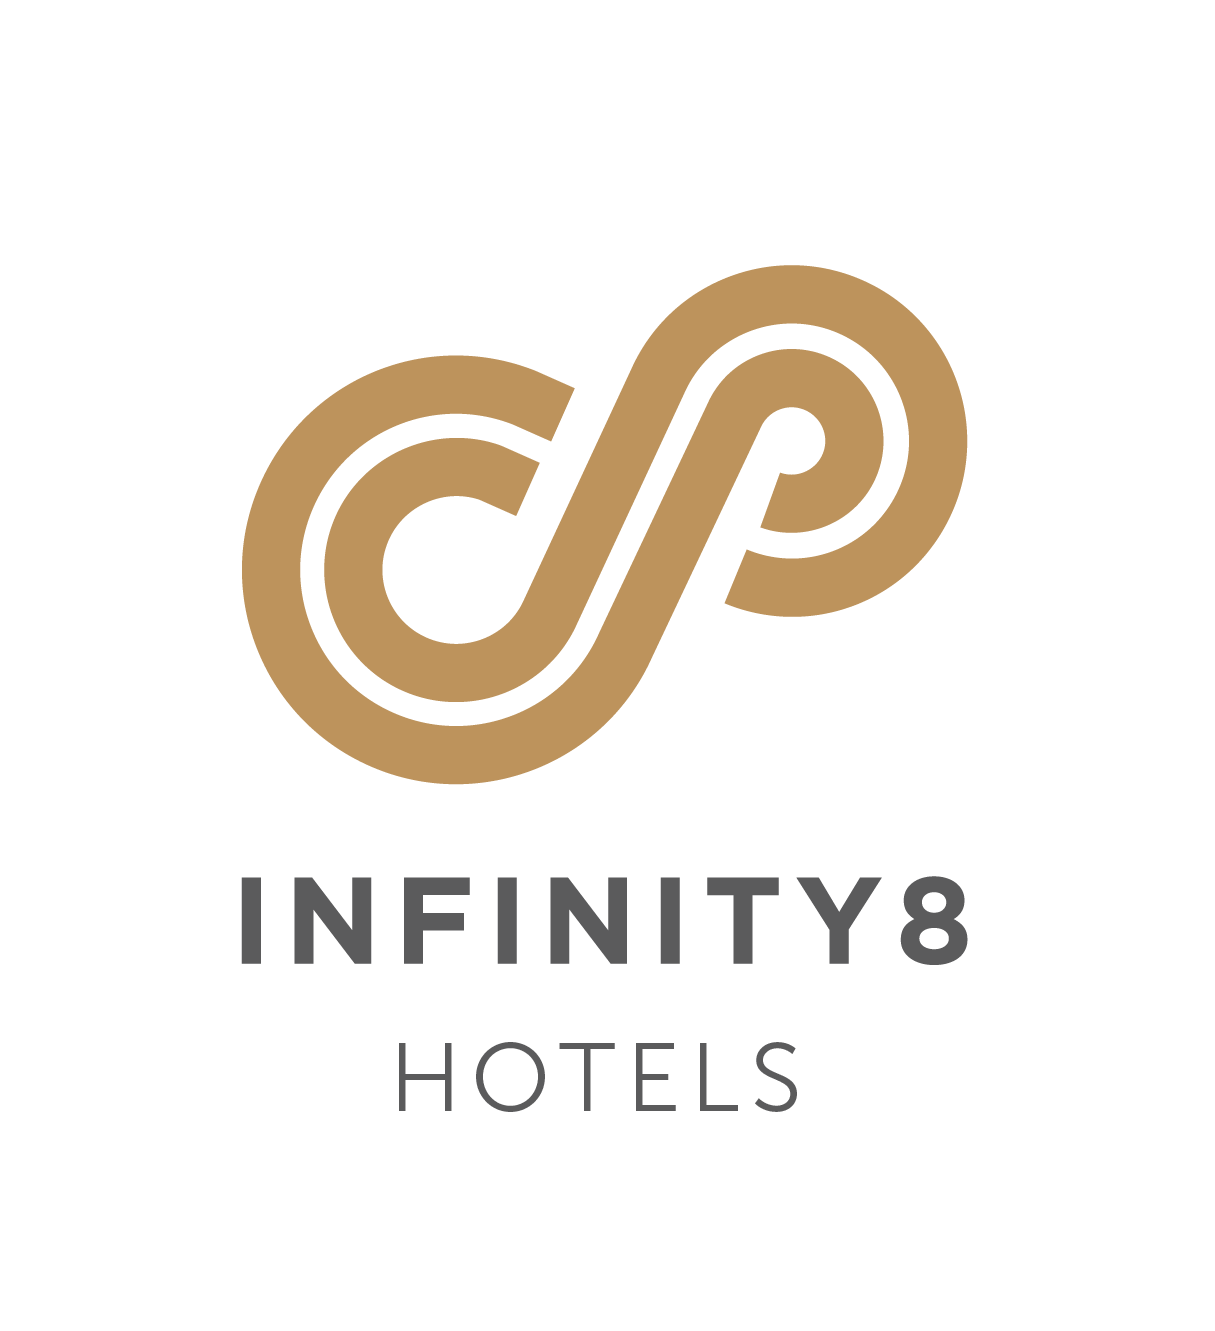 Infinity8 Hotels